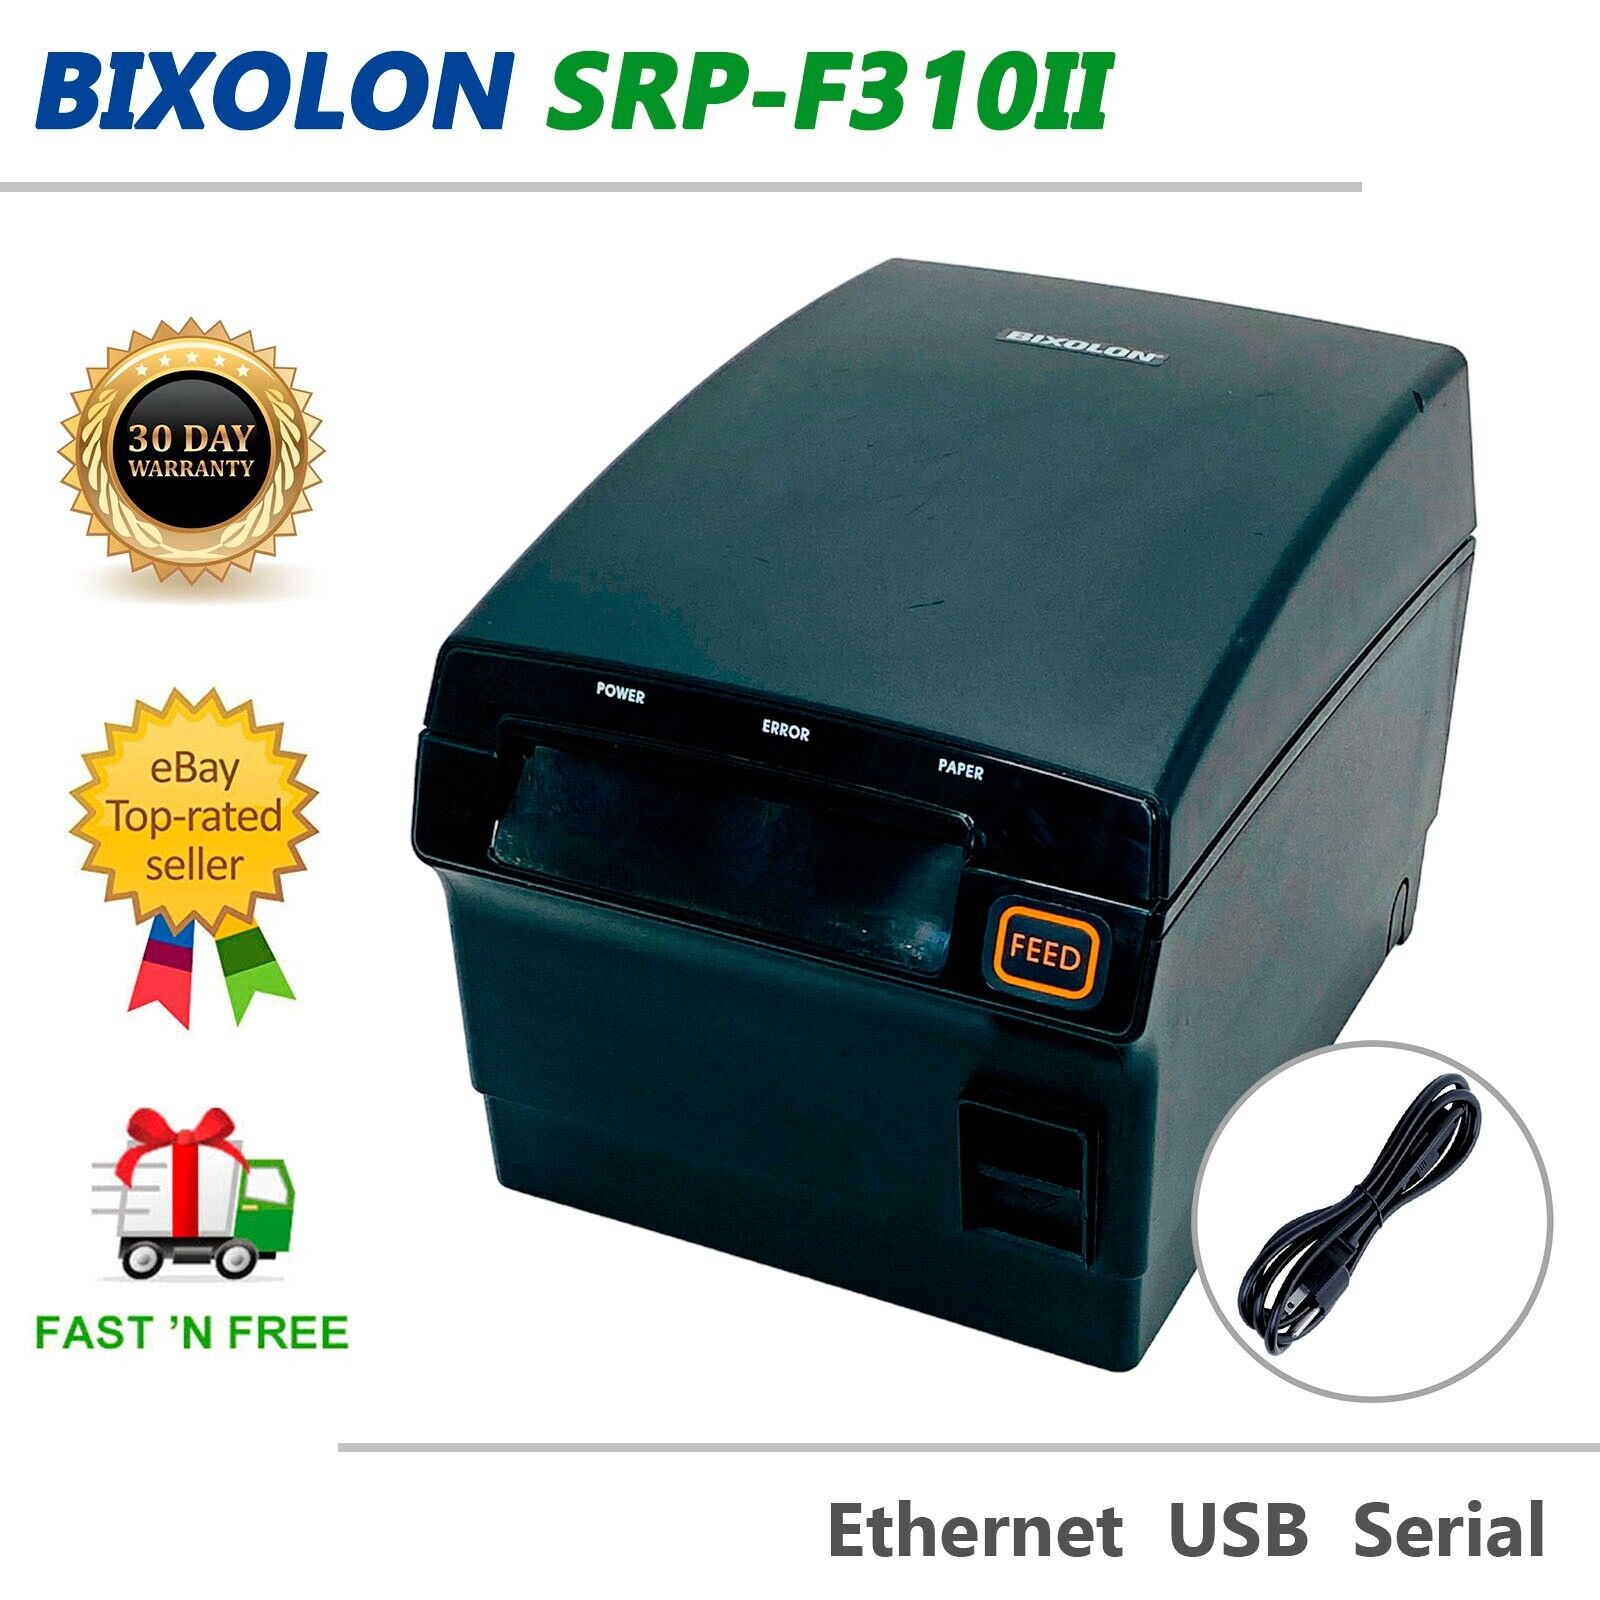 Bixolon SRP-F310II Direct Thermal POS Receipt Printer USB Ethernet Serial